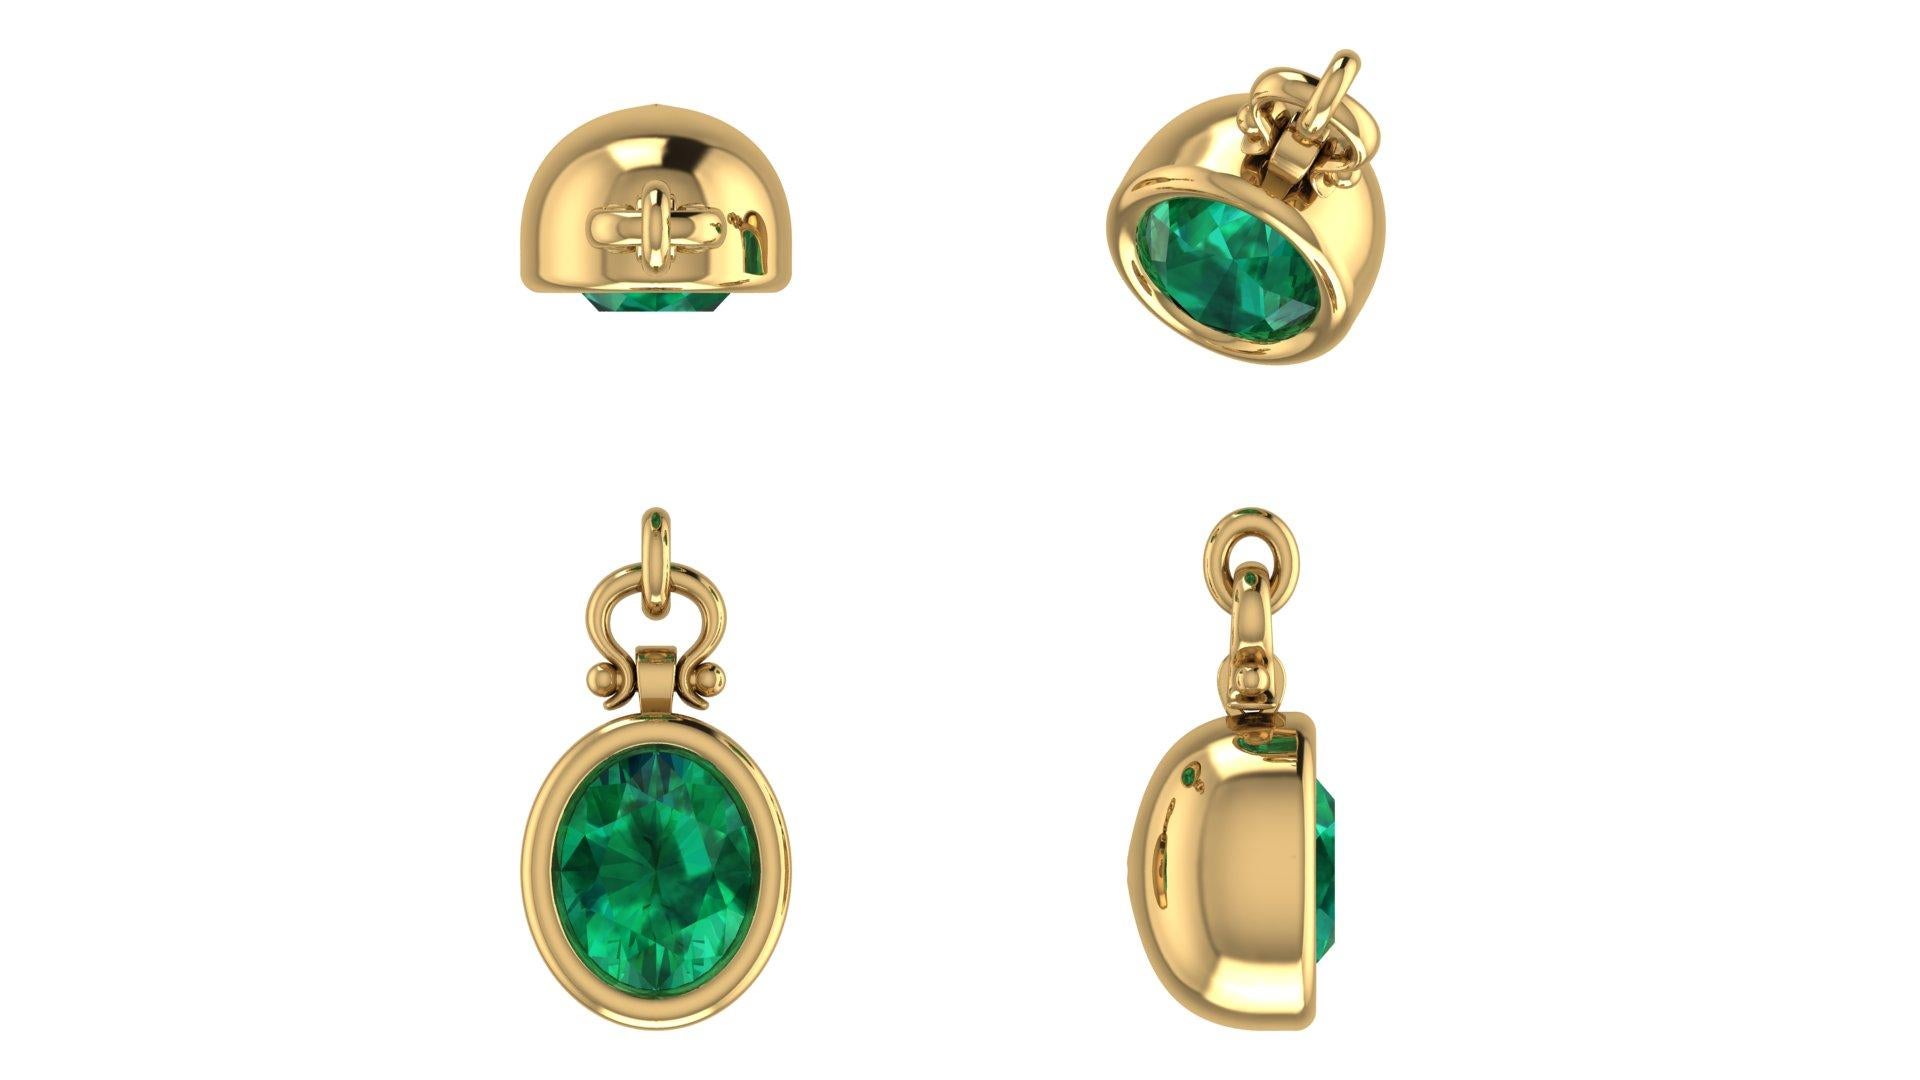 IGITL Certified 2.38 Carat Oval Cut Emerald Pendant Necklace in 18K For Sale 1